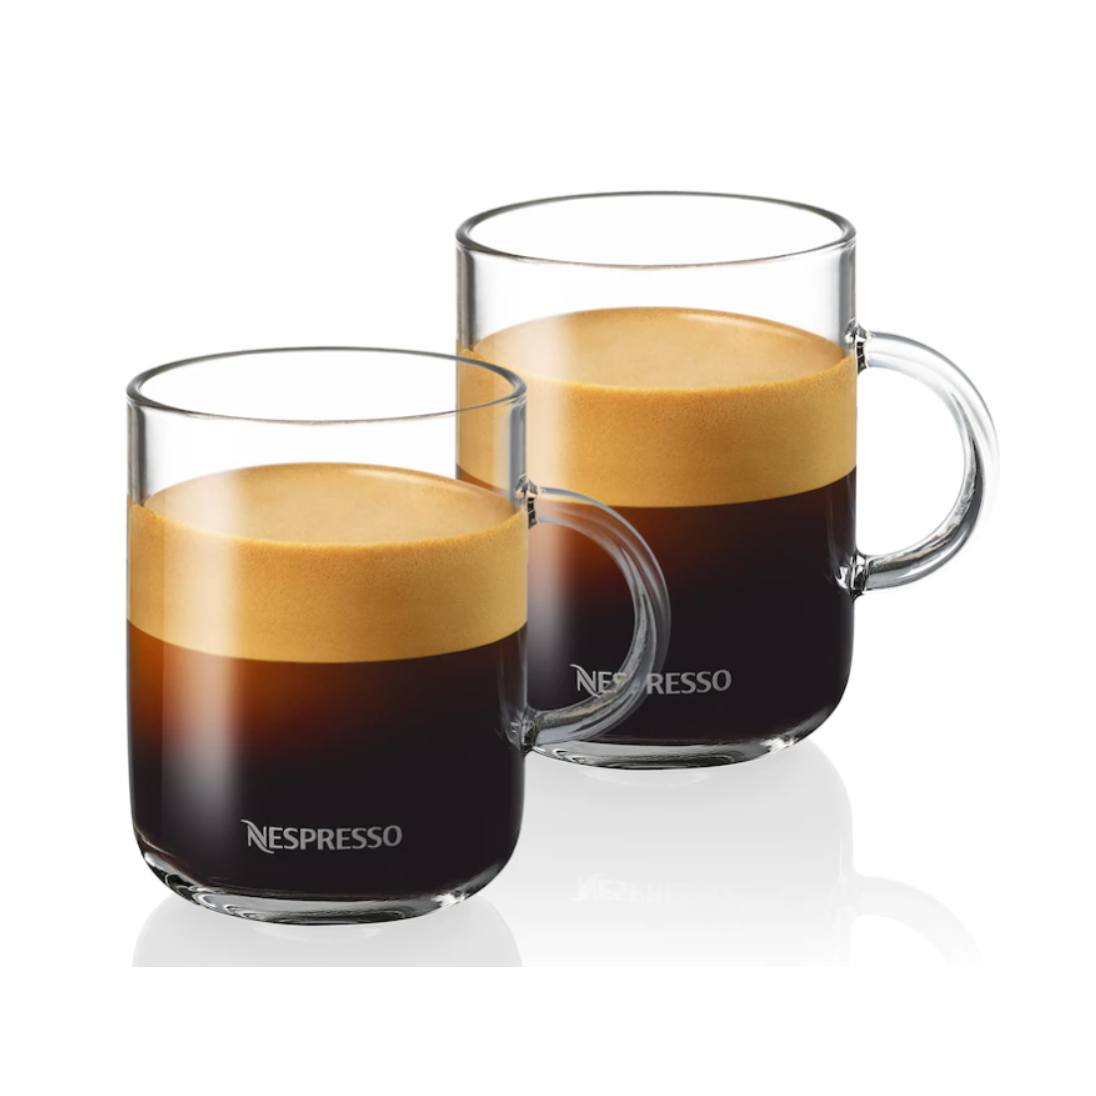 https://clarkdeals.com/wp-content/uploads/2021/05/Nespresso-mugs.png